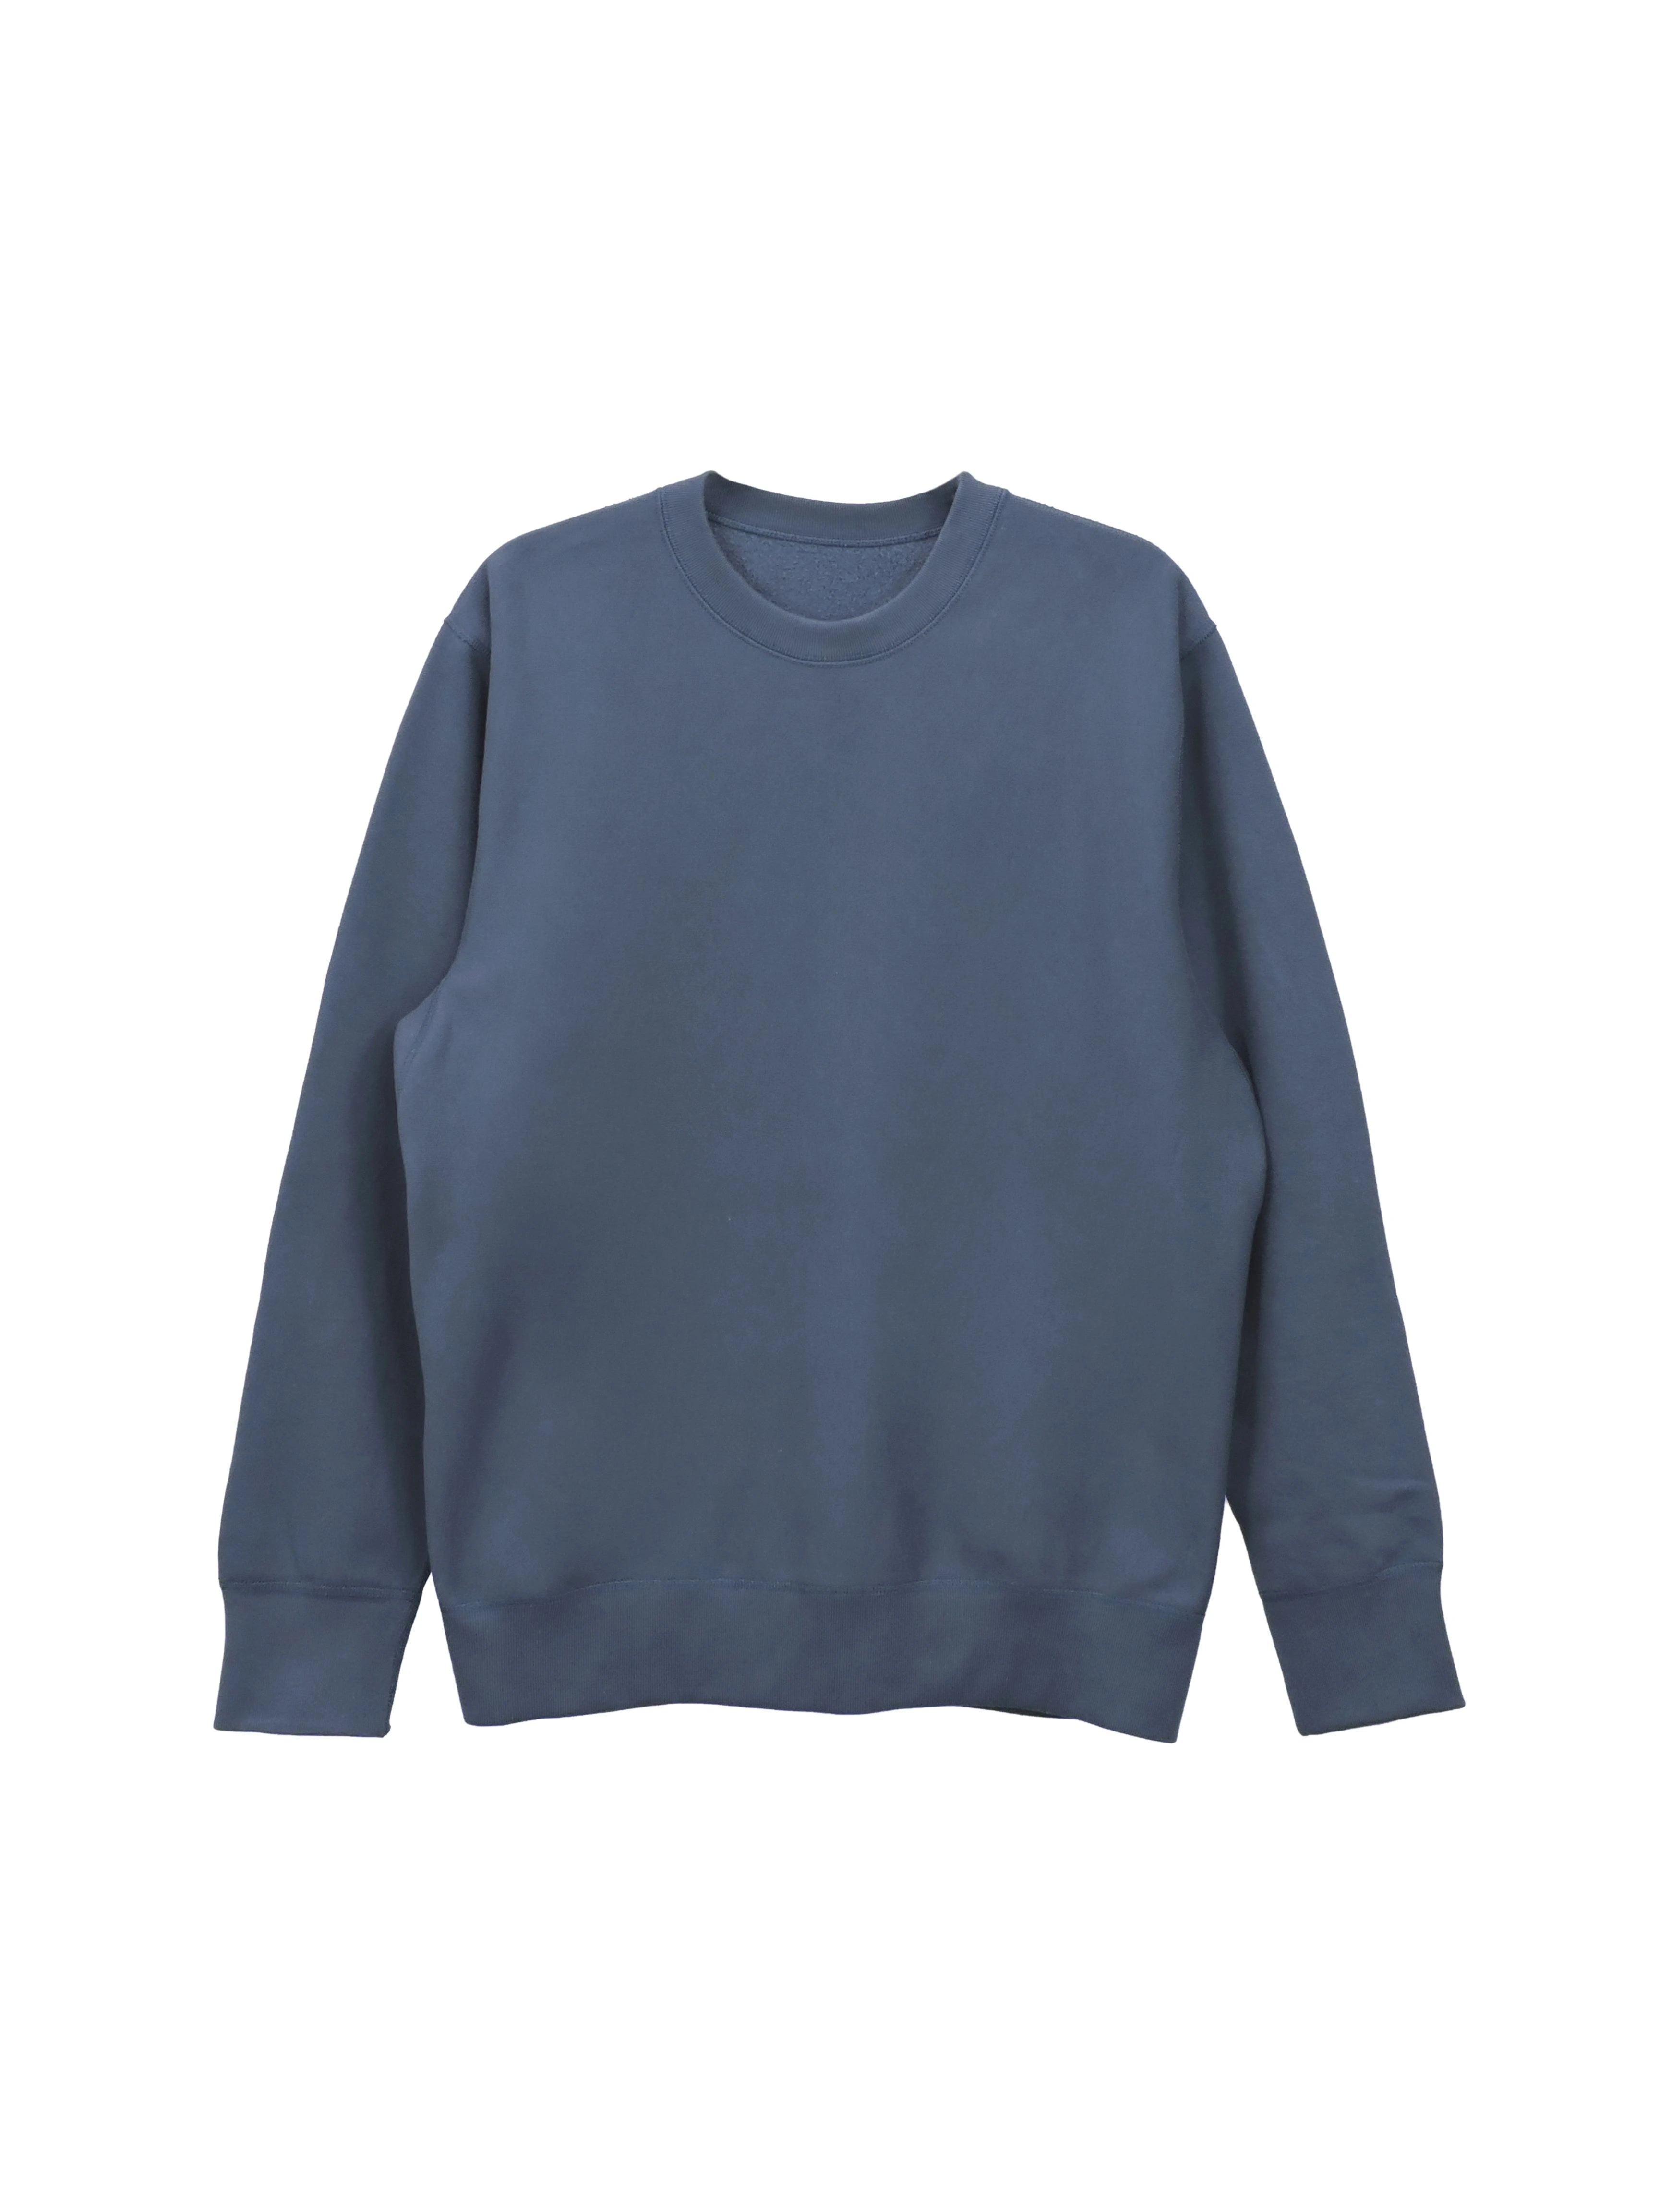 Sailor Blue Crewneck Sweater | 450 GSM Organic Cotton | Made in Canada